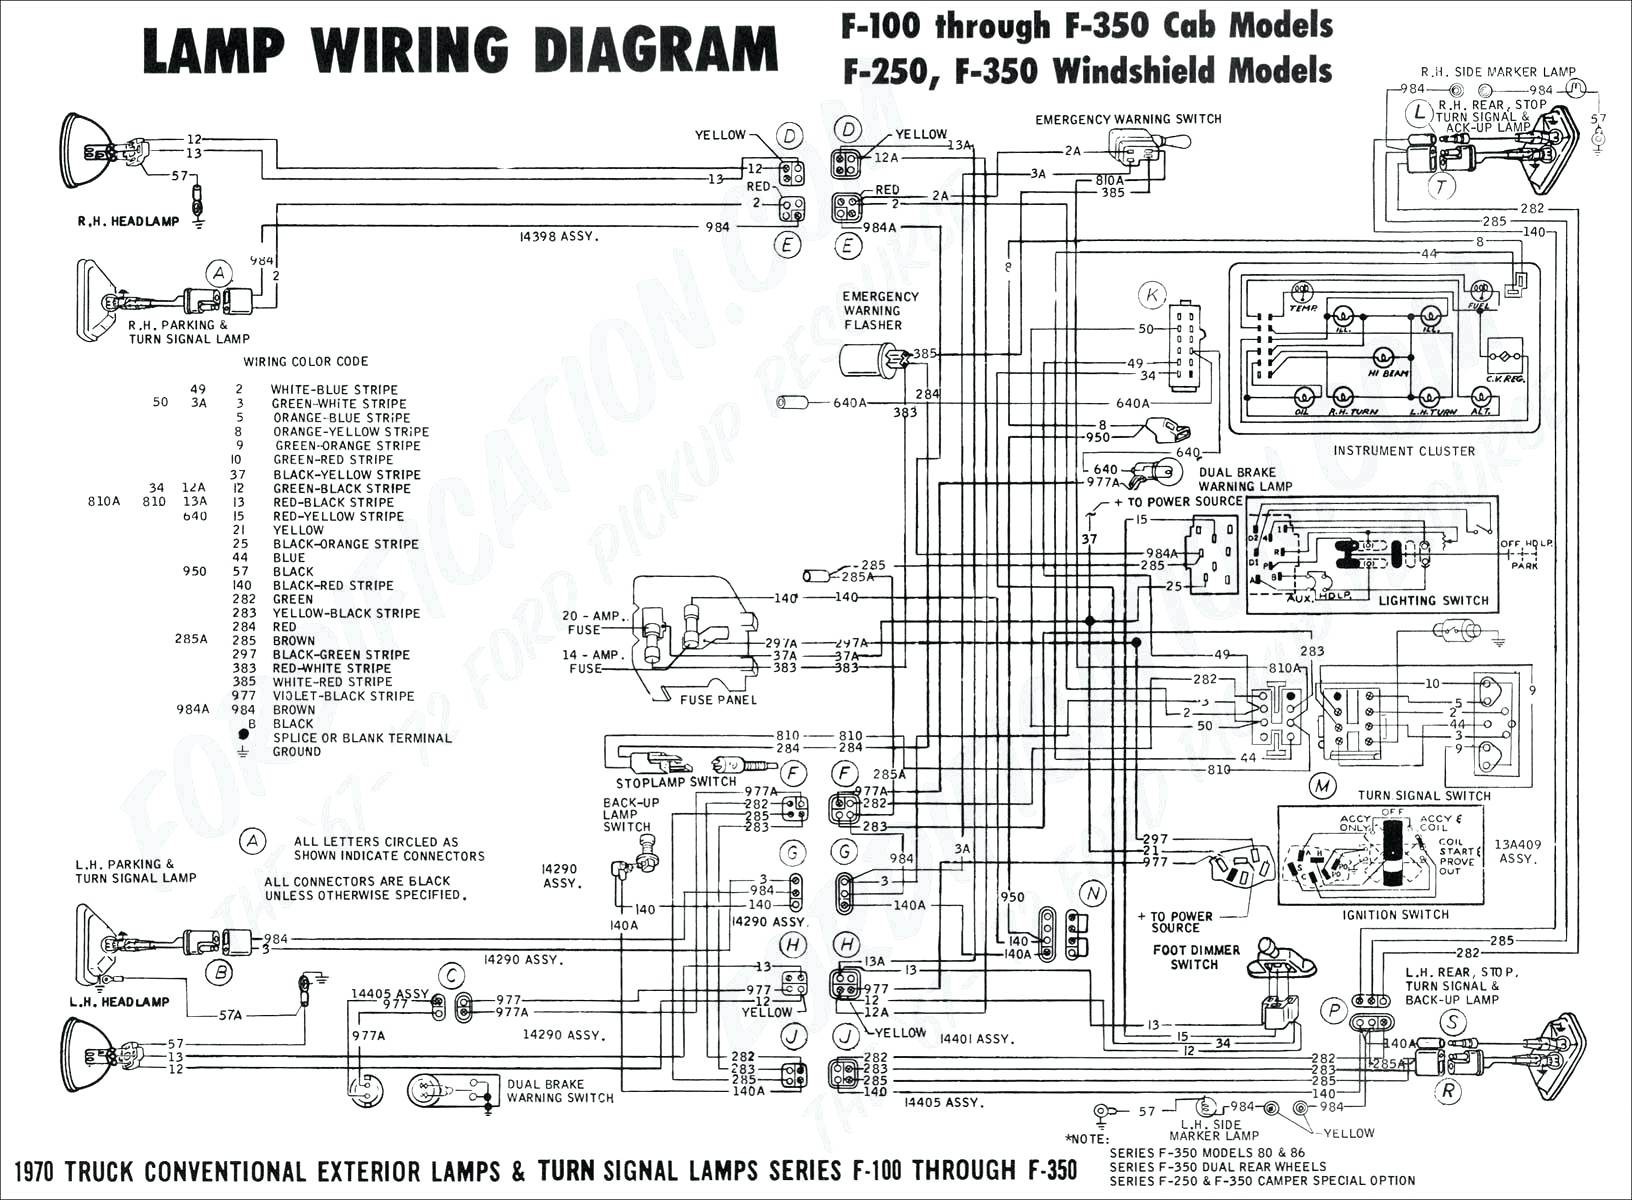 Horse Trailer Wiring Diagram Inspirational Small Utility Trailer Wiring Diagram Wire with Basic Pics Diagrams